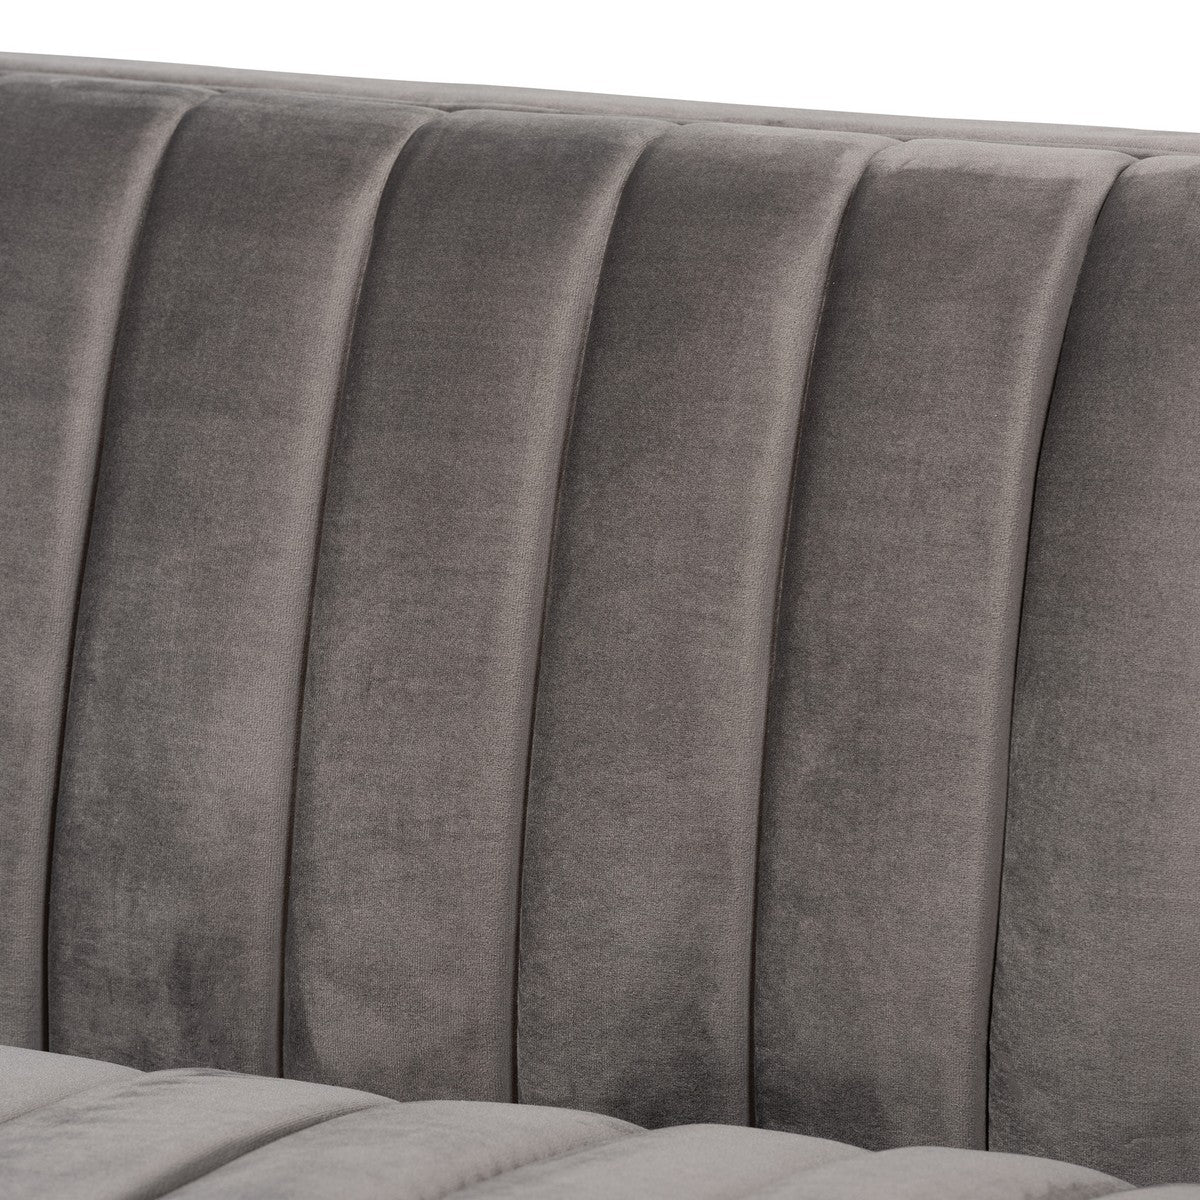 Baxton Studio Aveline Glam and Luxe Grey Velvet Fabric Upholstered Brushed Gold Finished Sofa